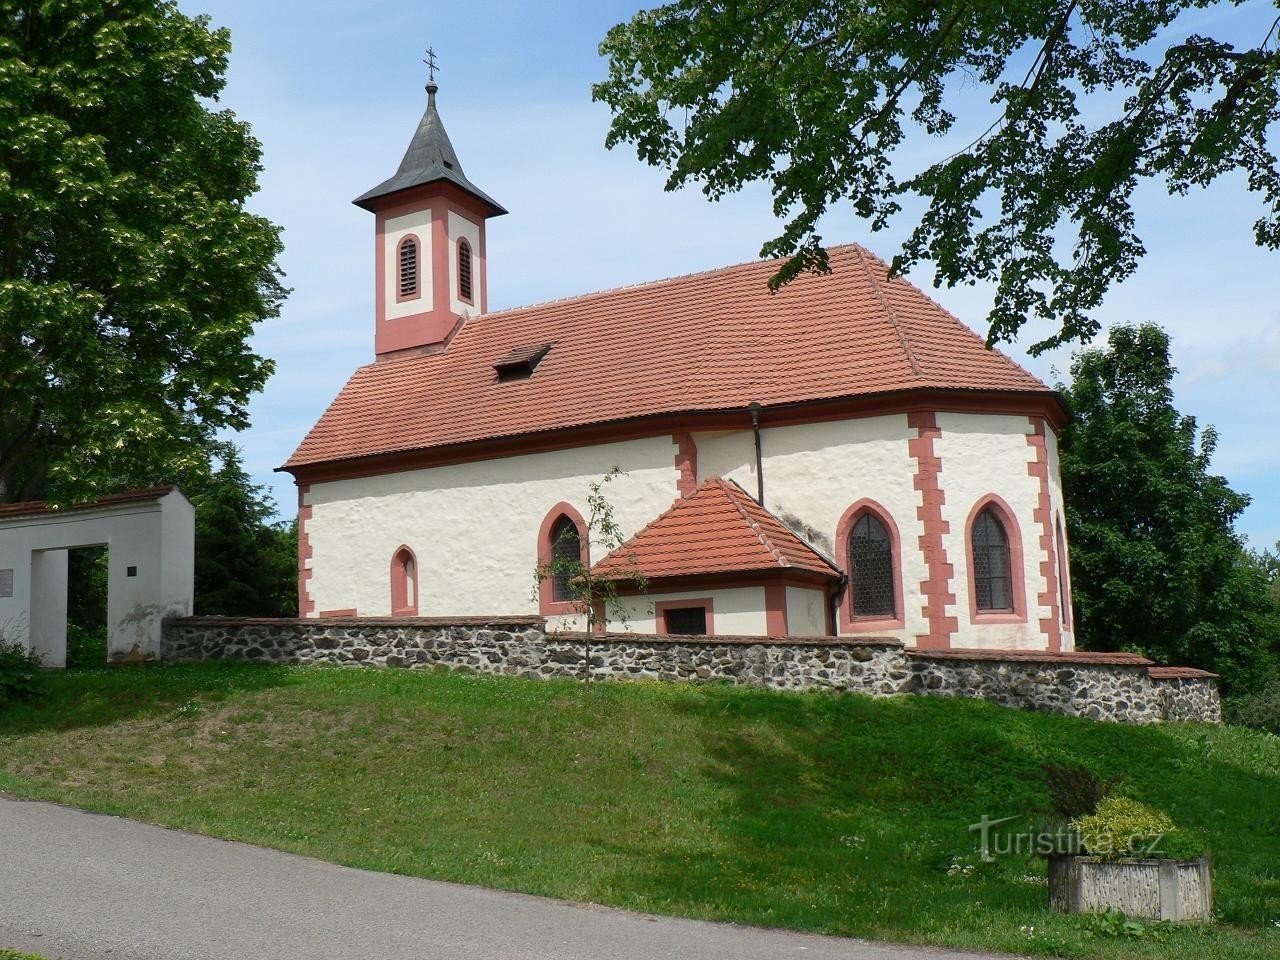 Zdemyslice, south side of the church